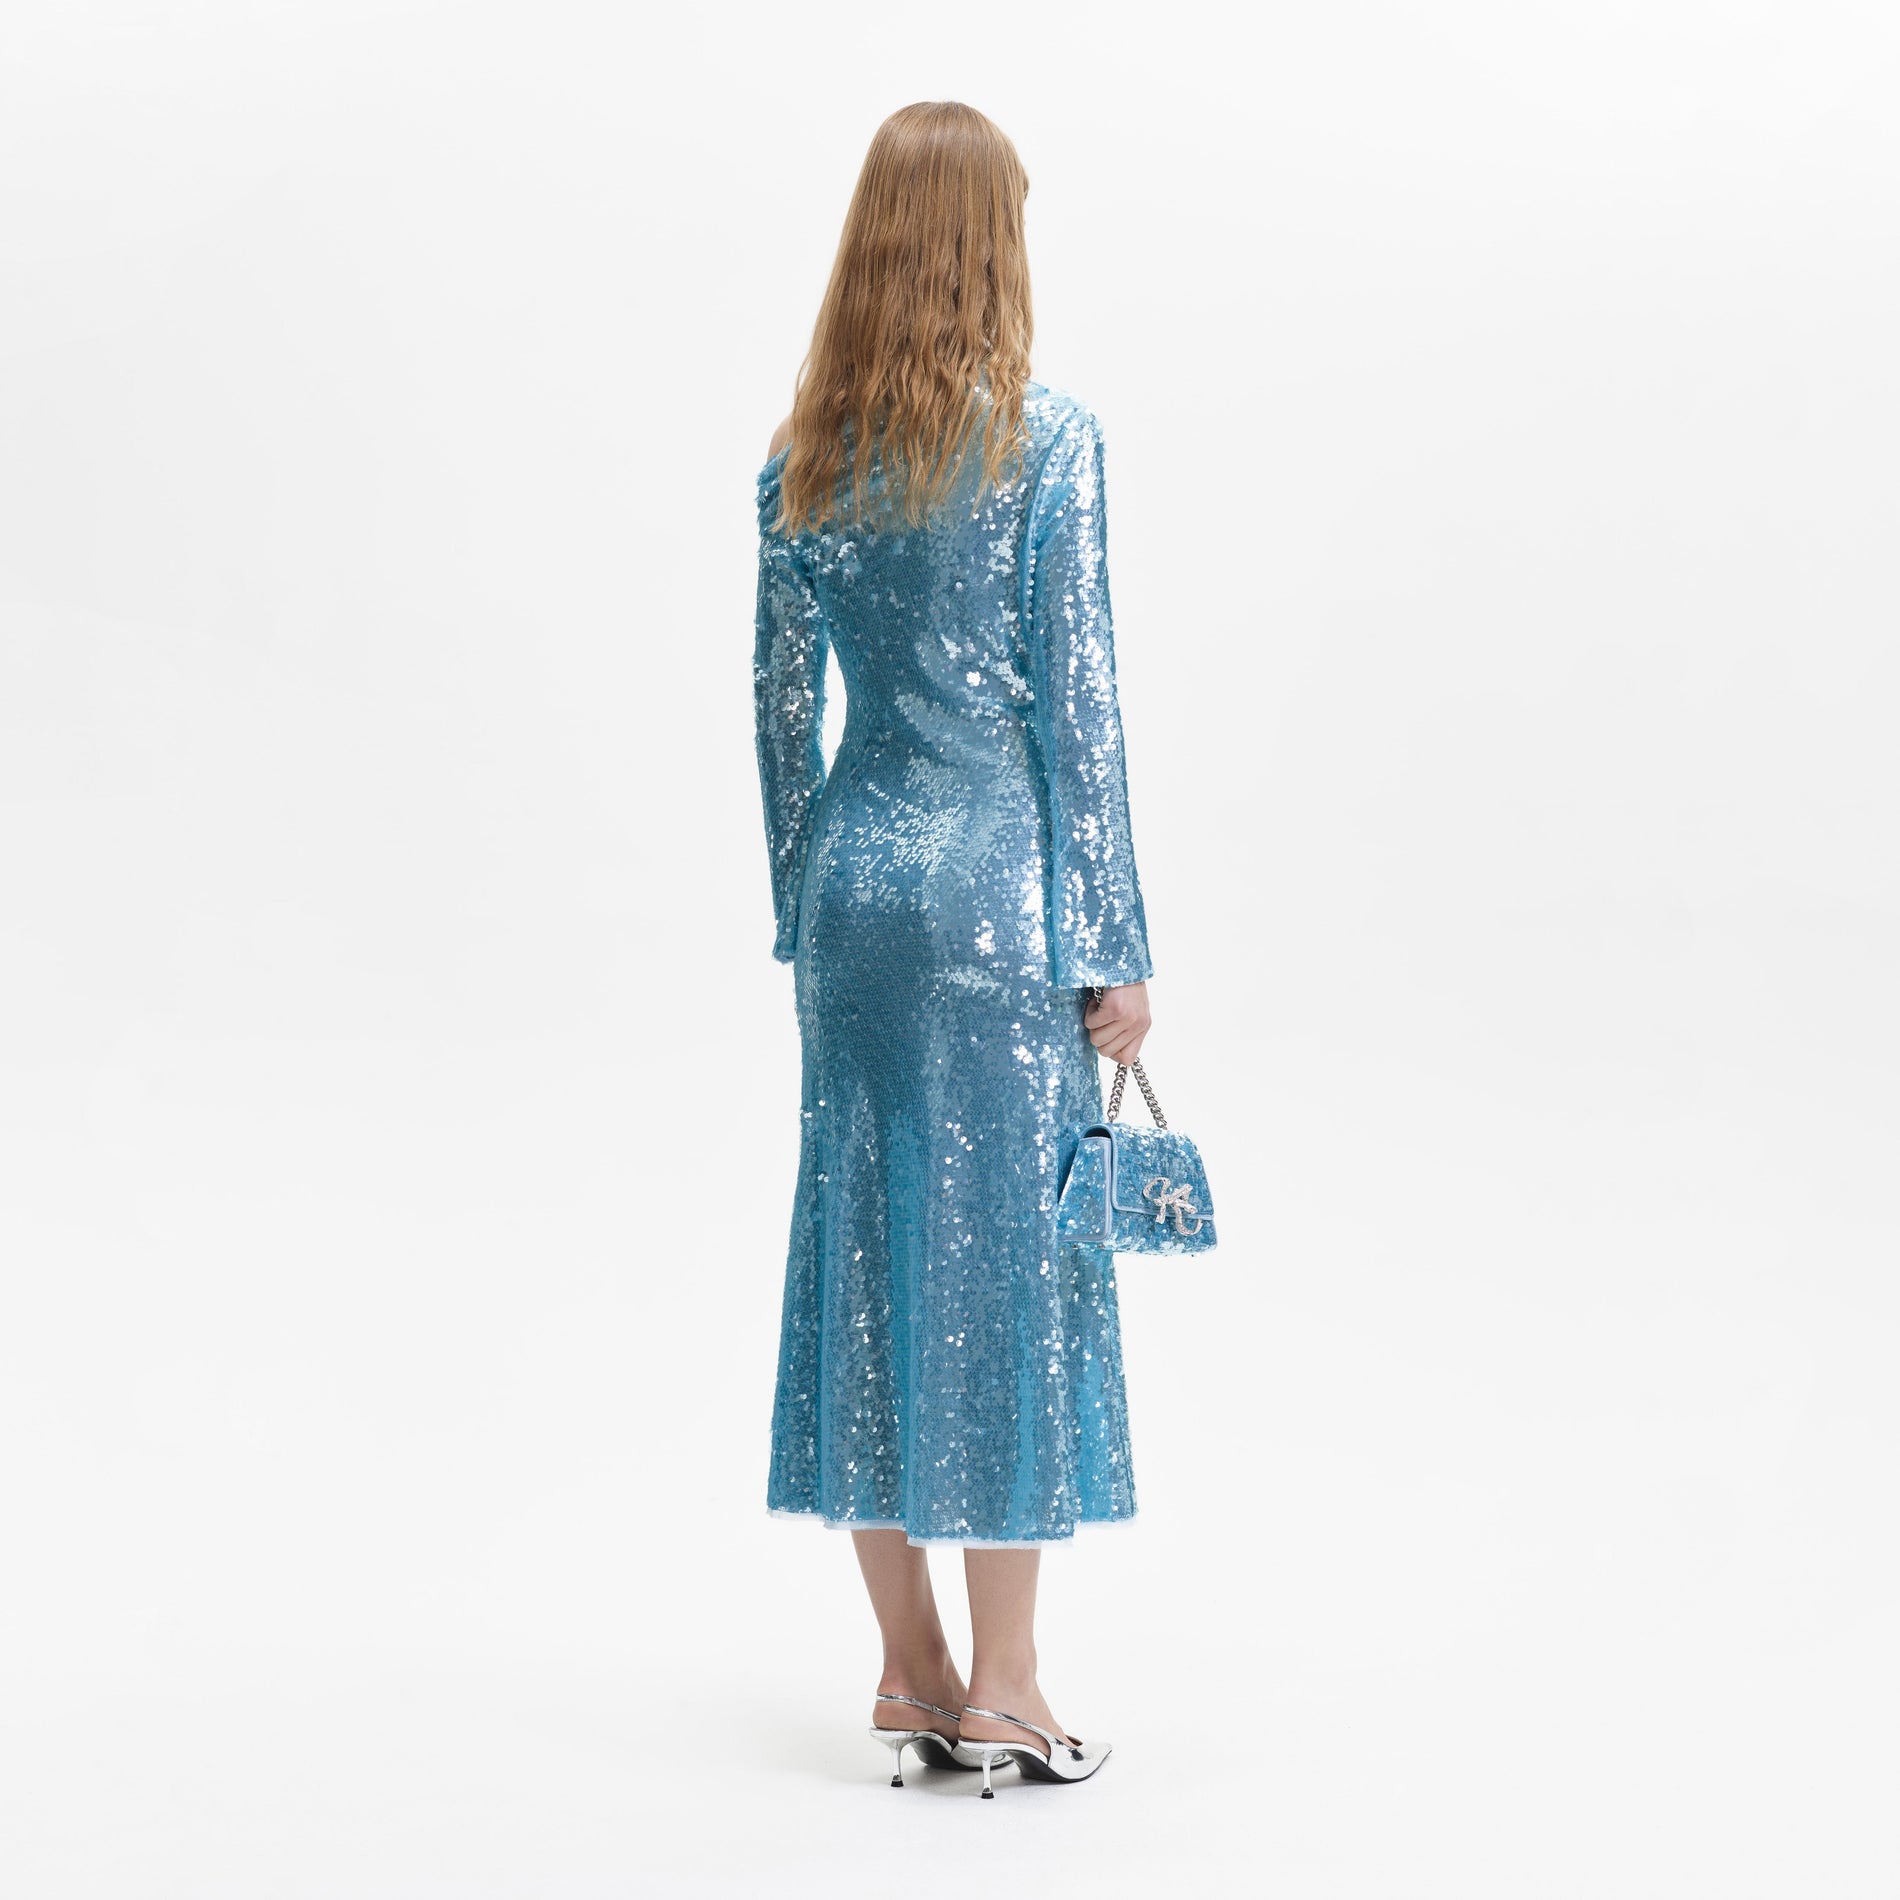 A woman wearing the Blue Sequin Asymmetric Midi Dress